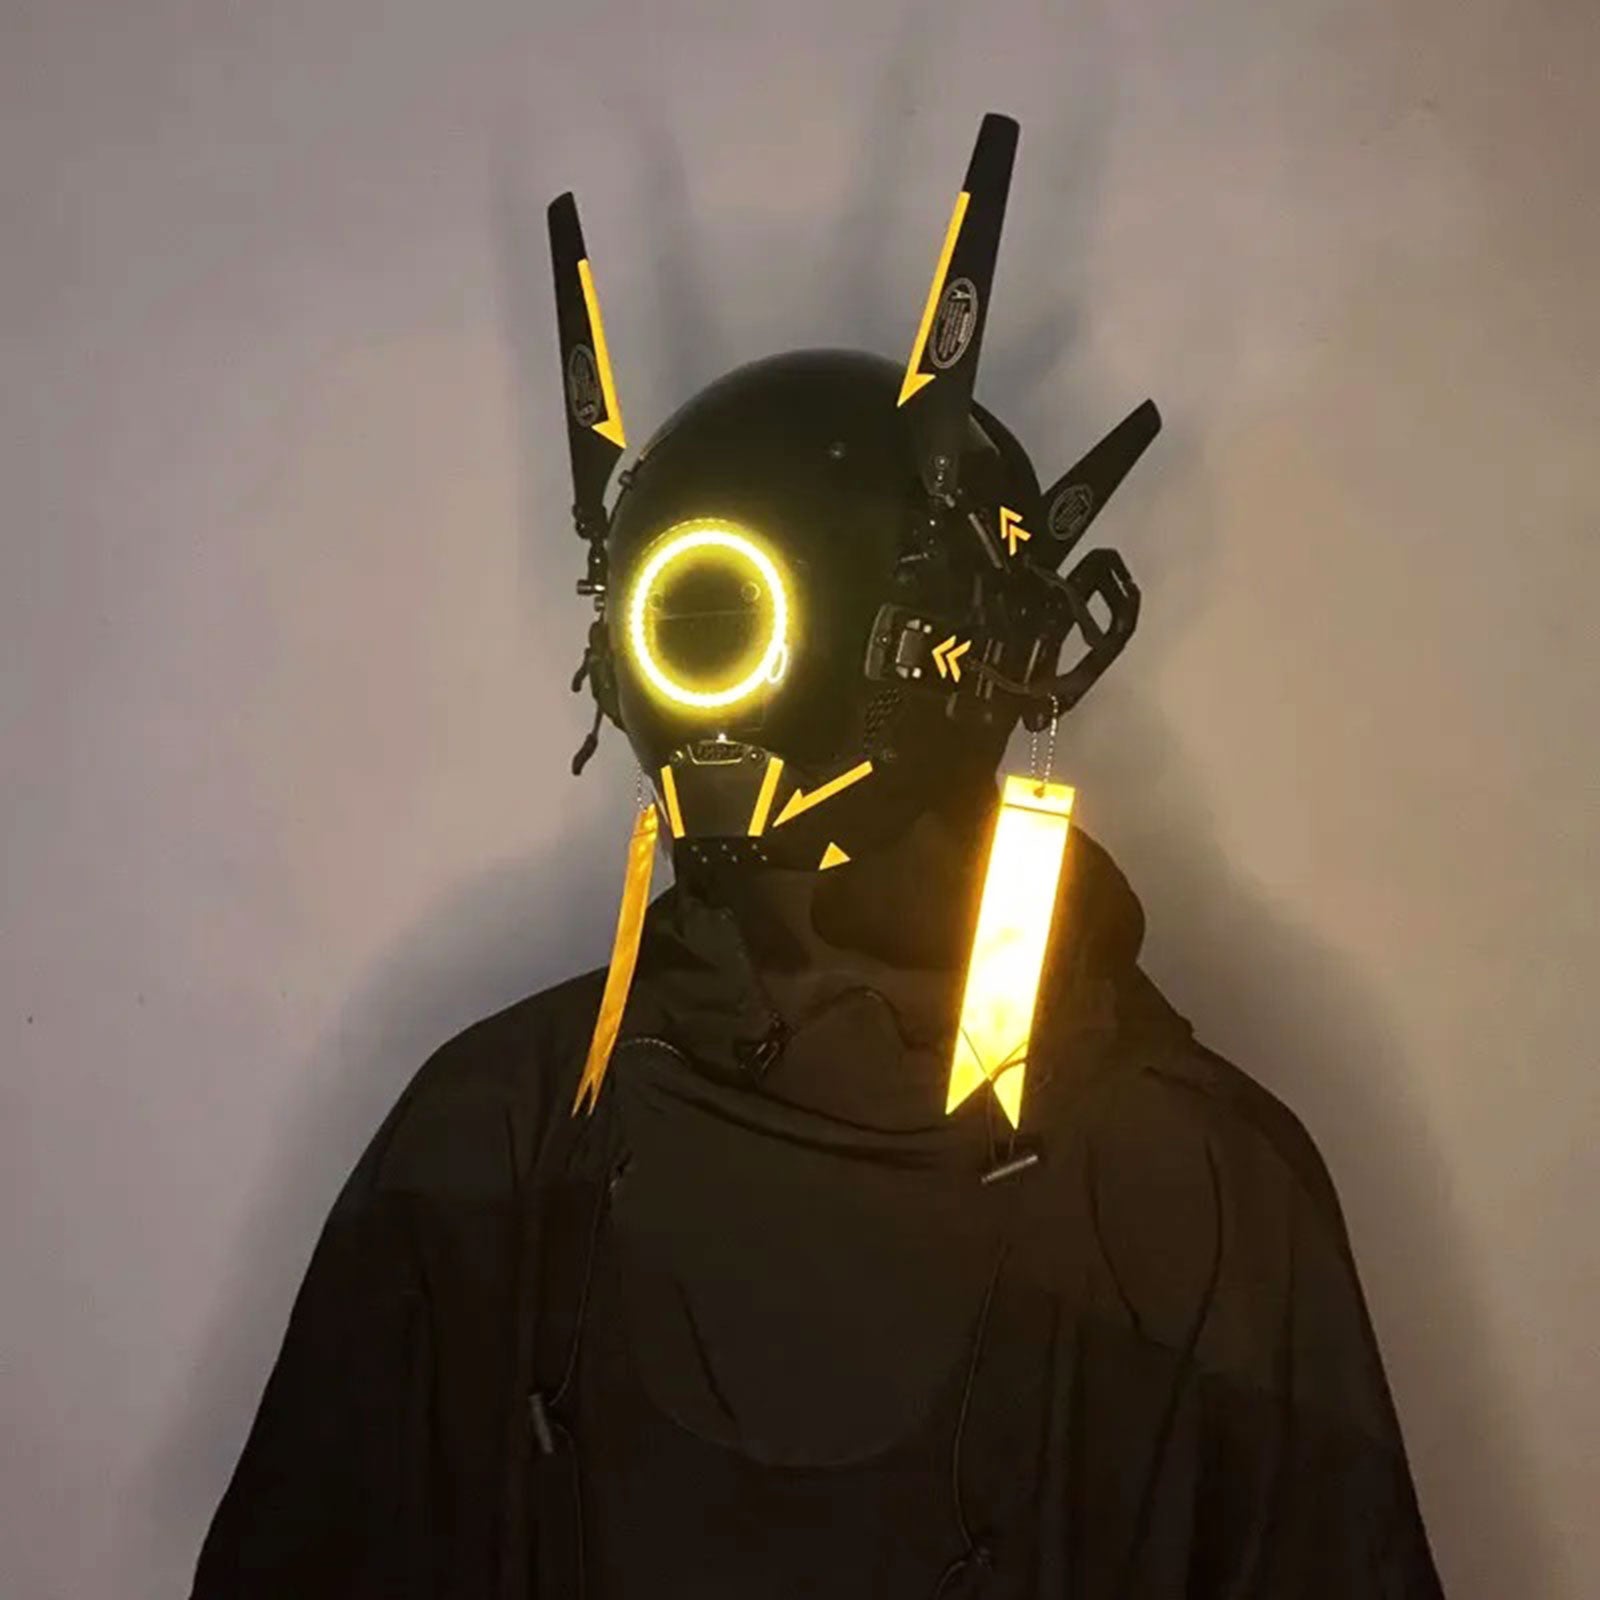 JAUPTO Cyberpunk Gothic Helmet,Punk Mask Techwear, Halloween Cosplay Technology Helmet Cosplay,Futuristic Mask with LED Light